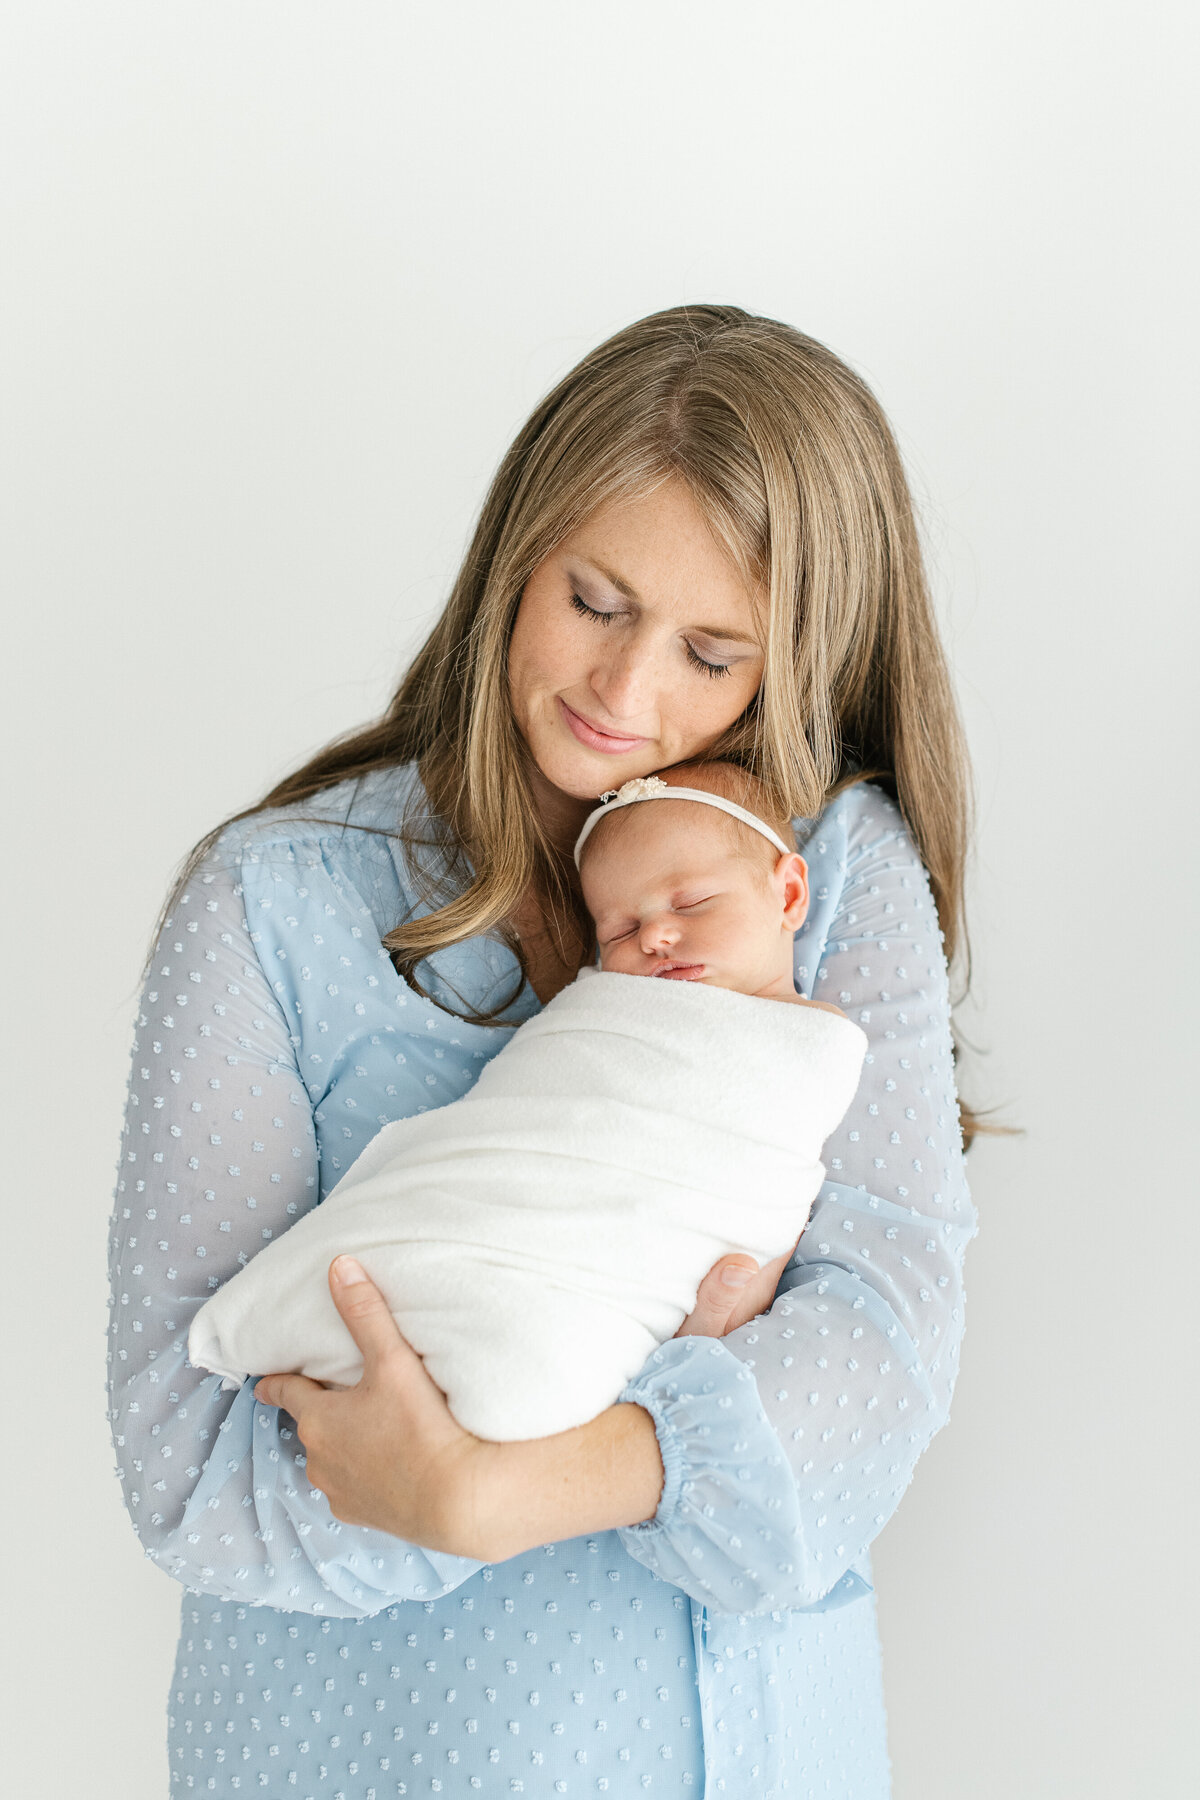 MMP Greenville Newborn Photographer - Catherine-5215